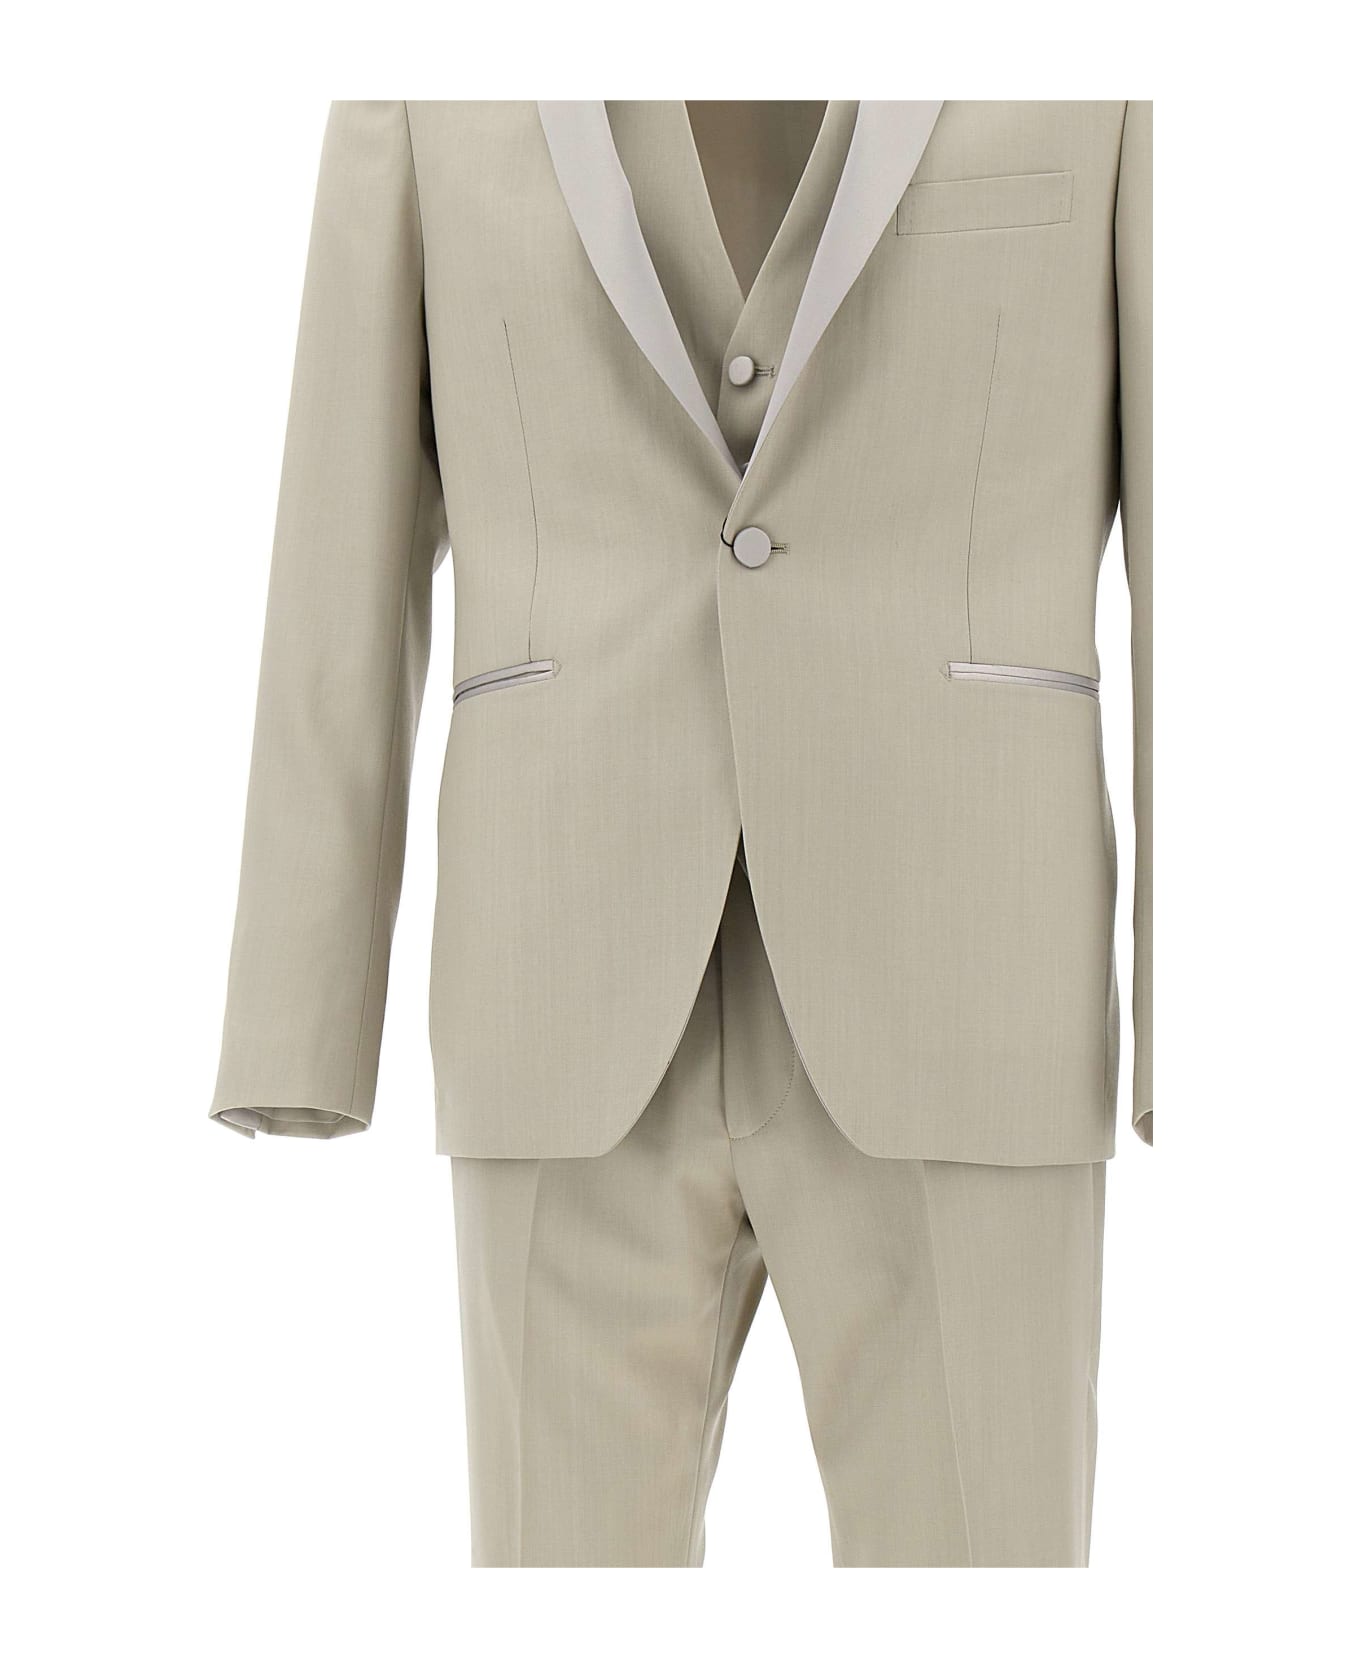 Tagliatore Three-piece Formal Suit - Green/grey